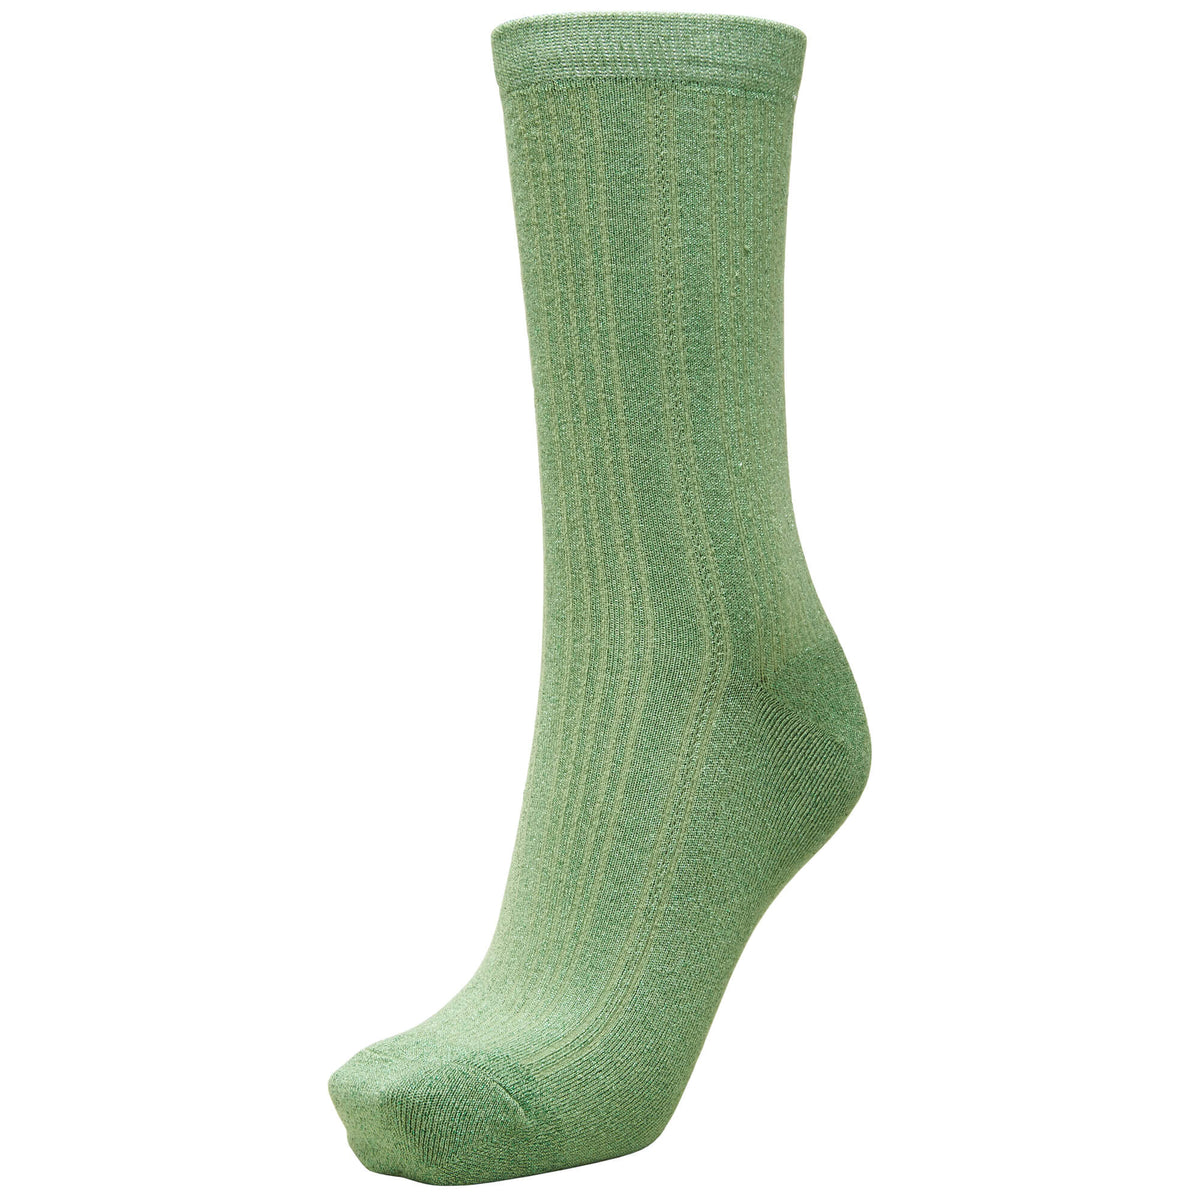 SLF Lana socks in watercress